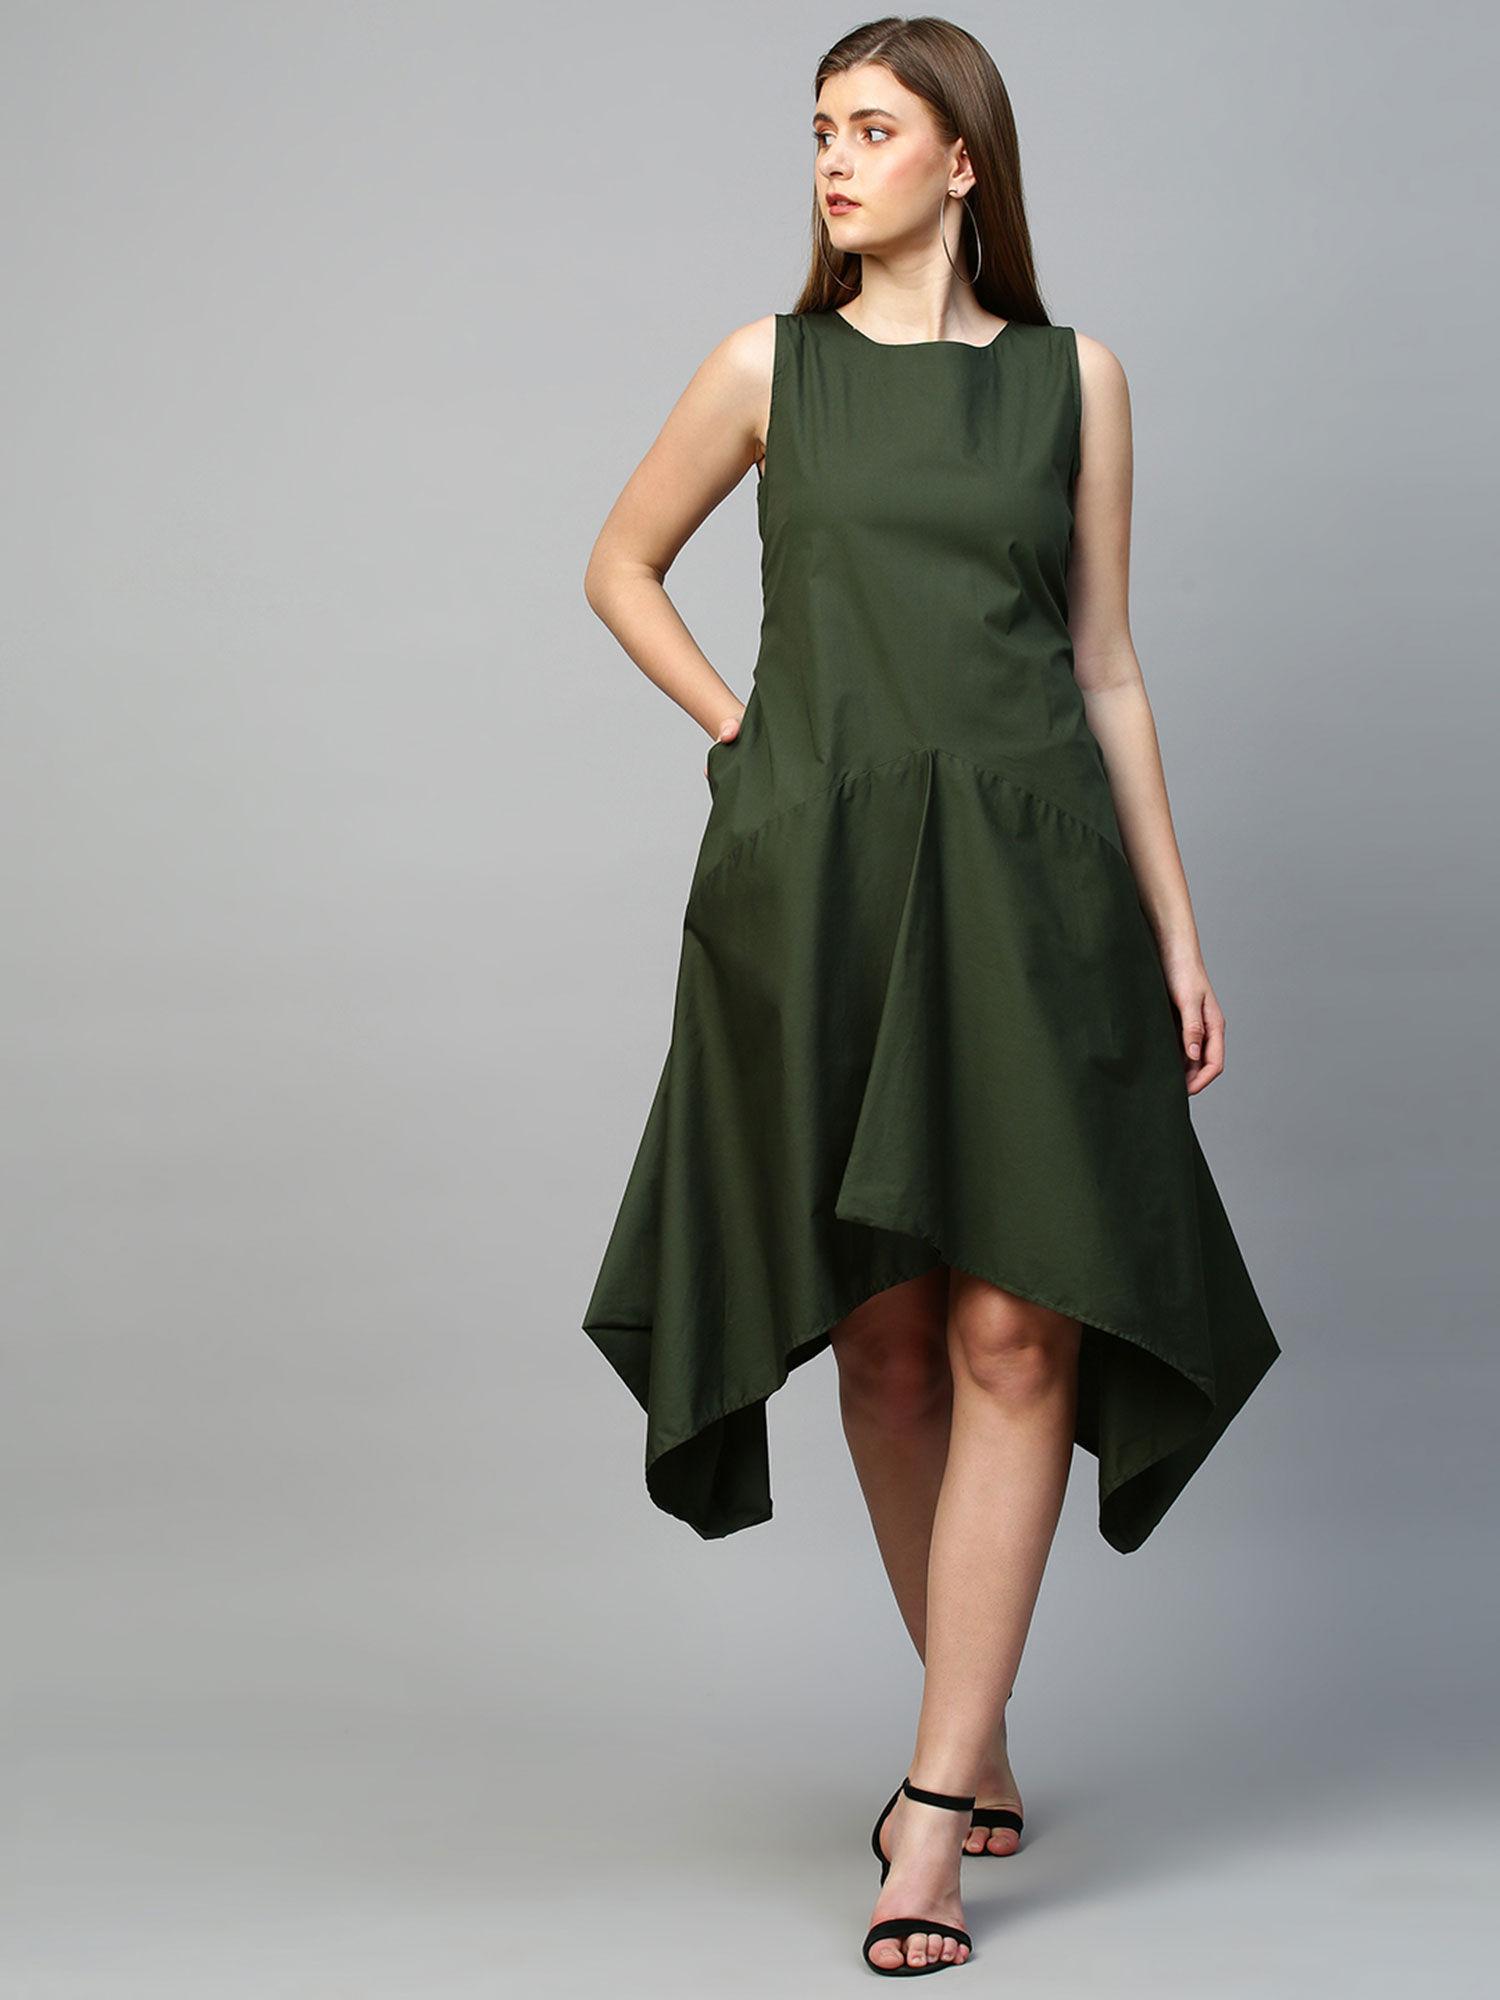 asymmetric dress with zipper